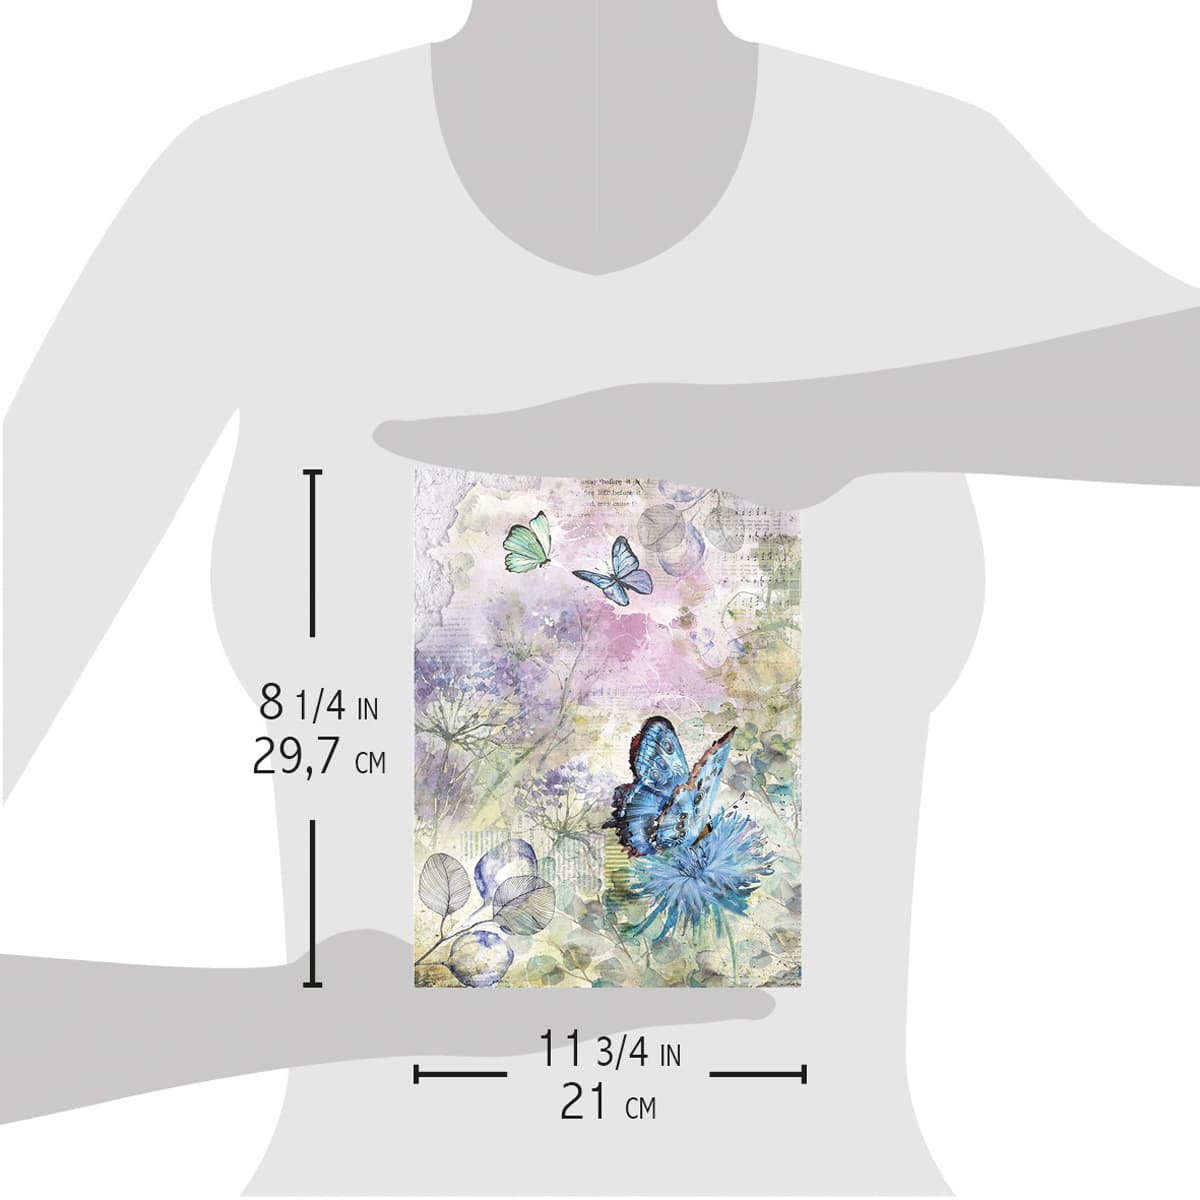 Piuma A4 Decoupage Paper - Blue Butterfly - CBRP121